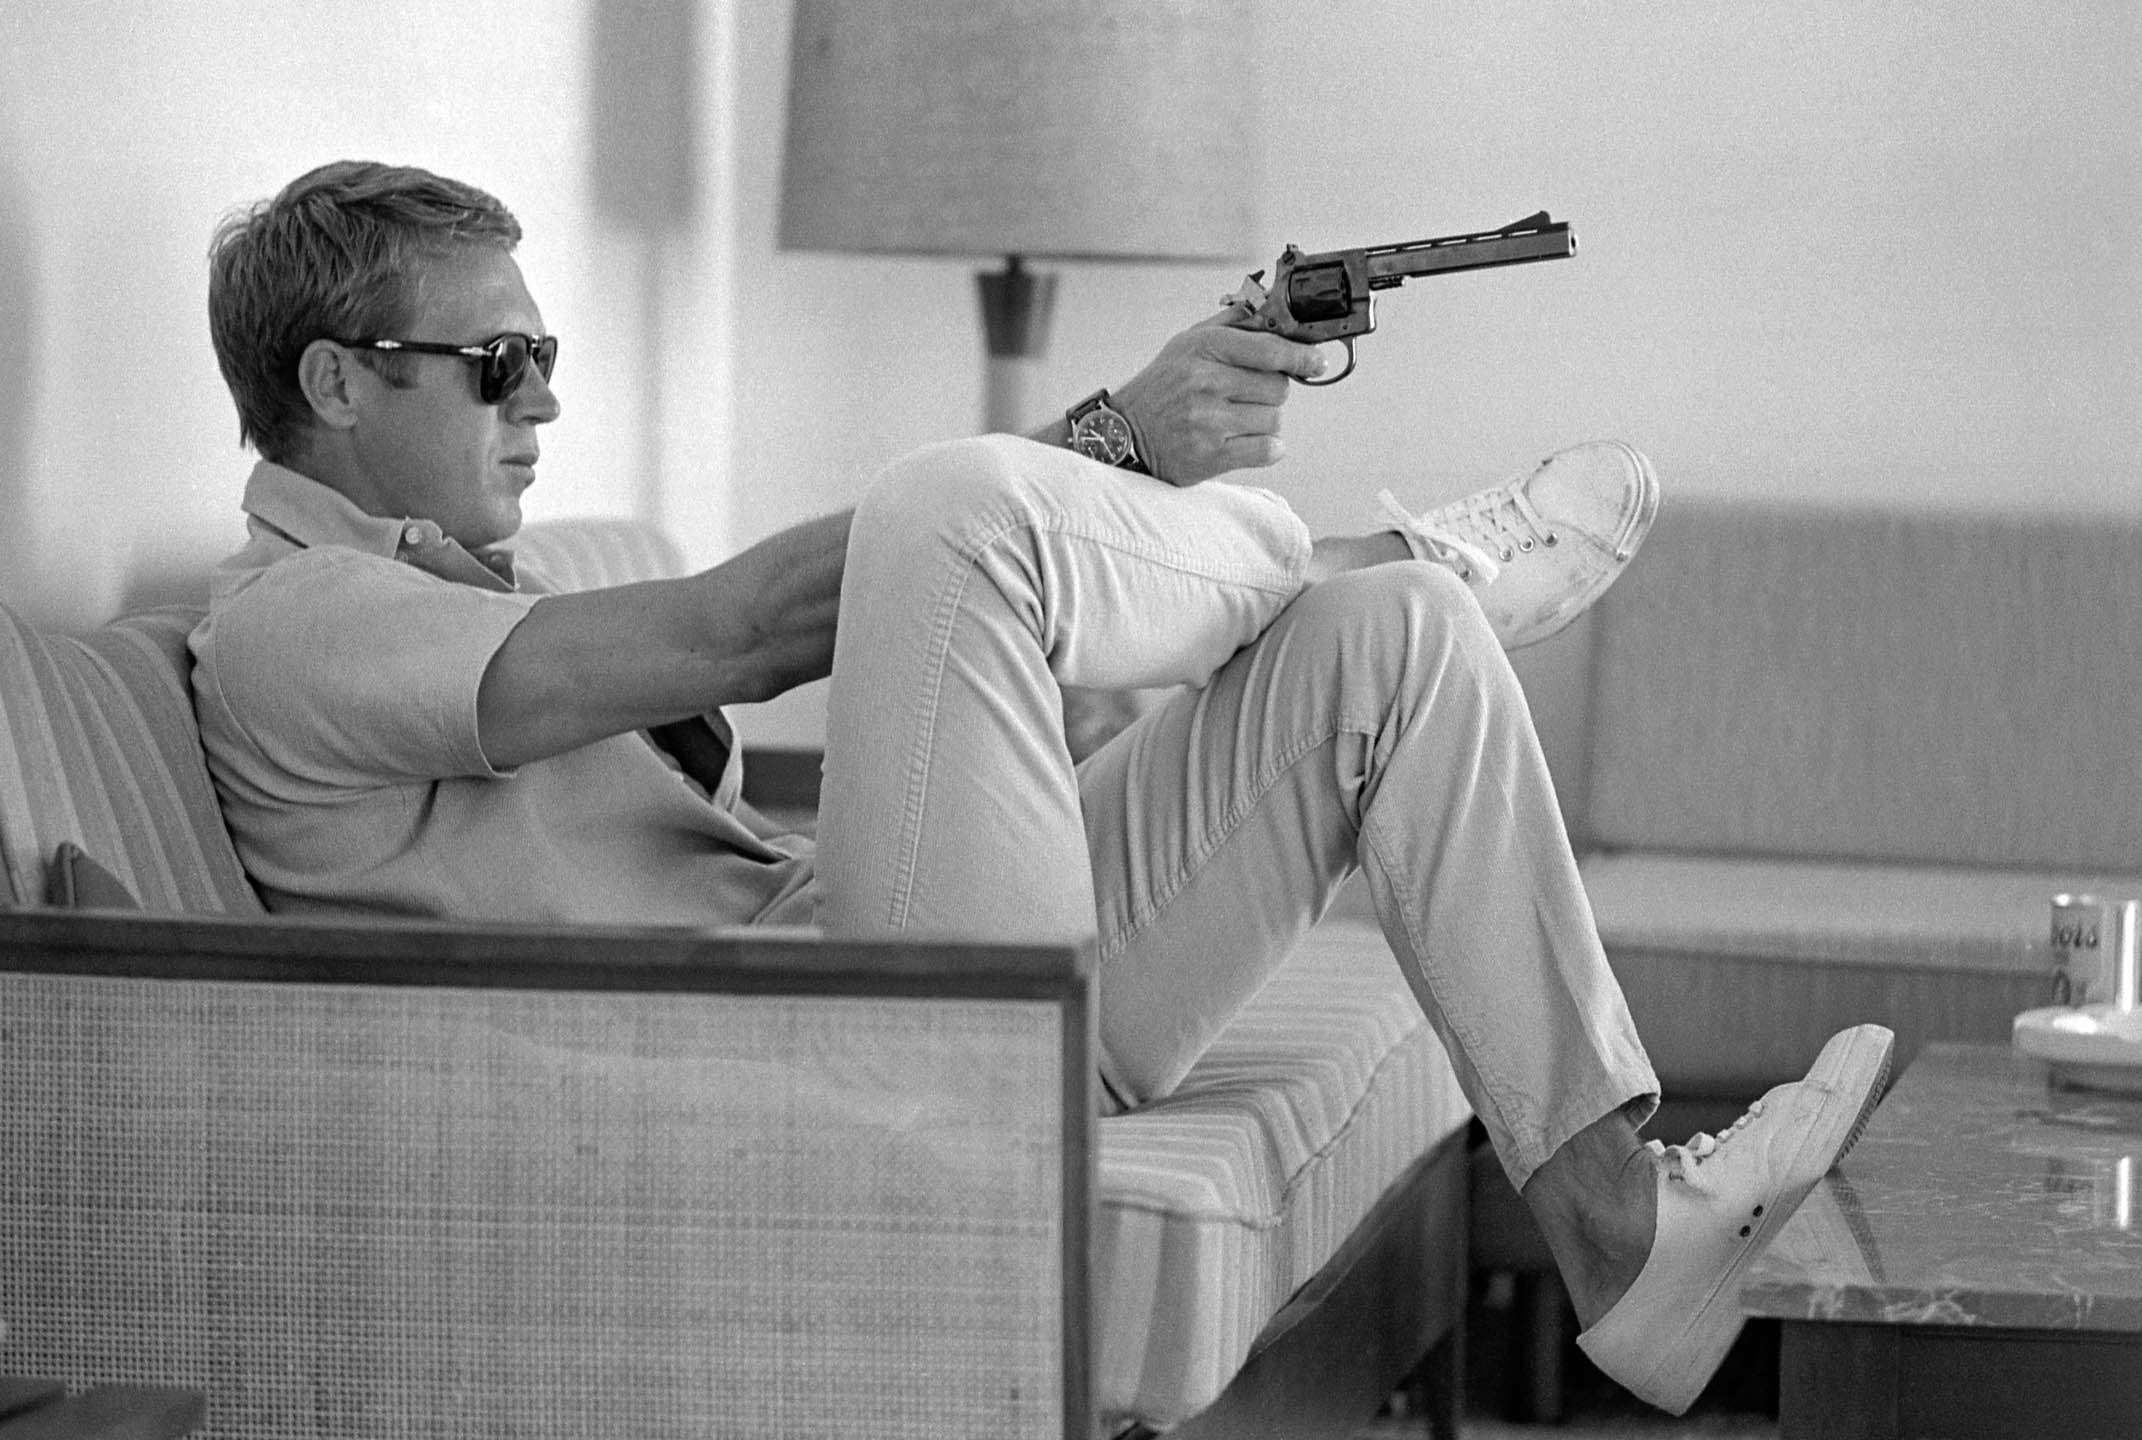 Steve McQueen aims a pistol in his living room.